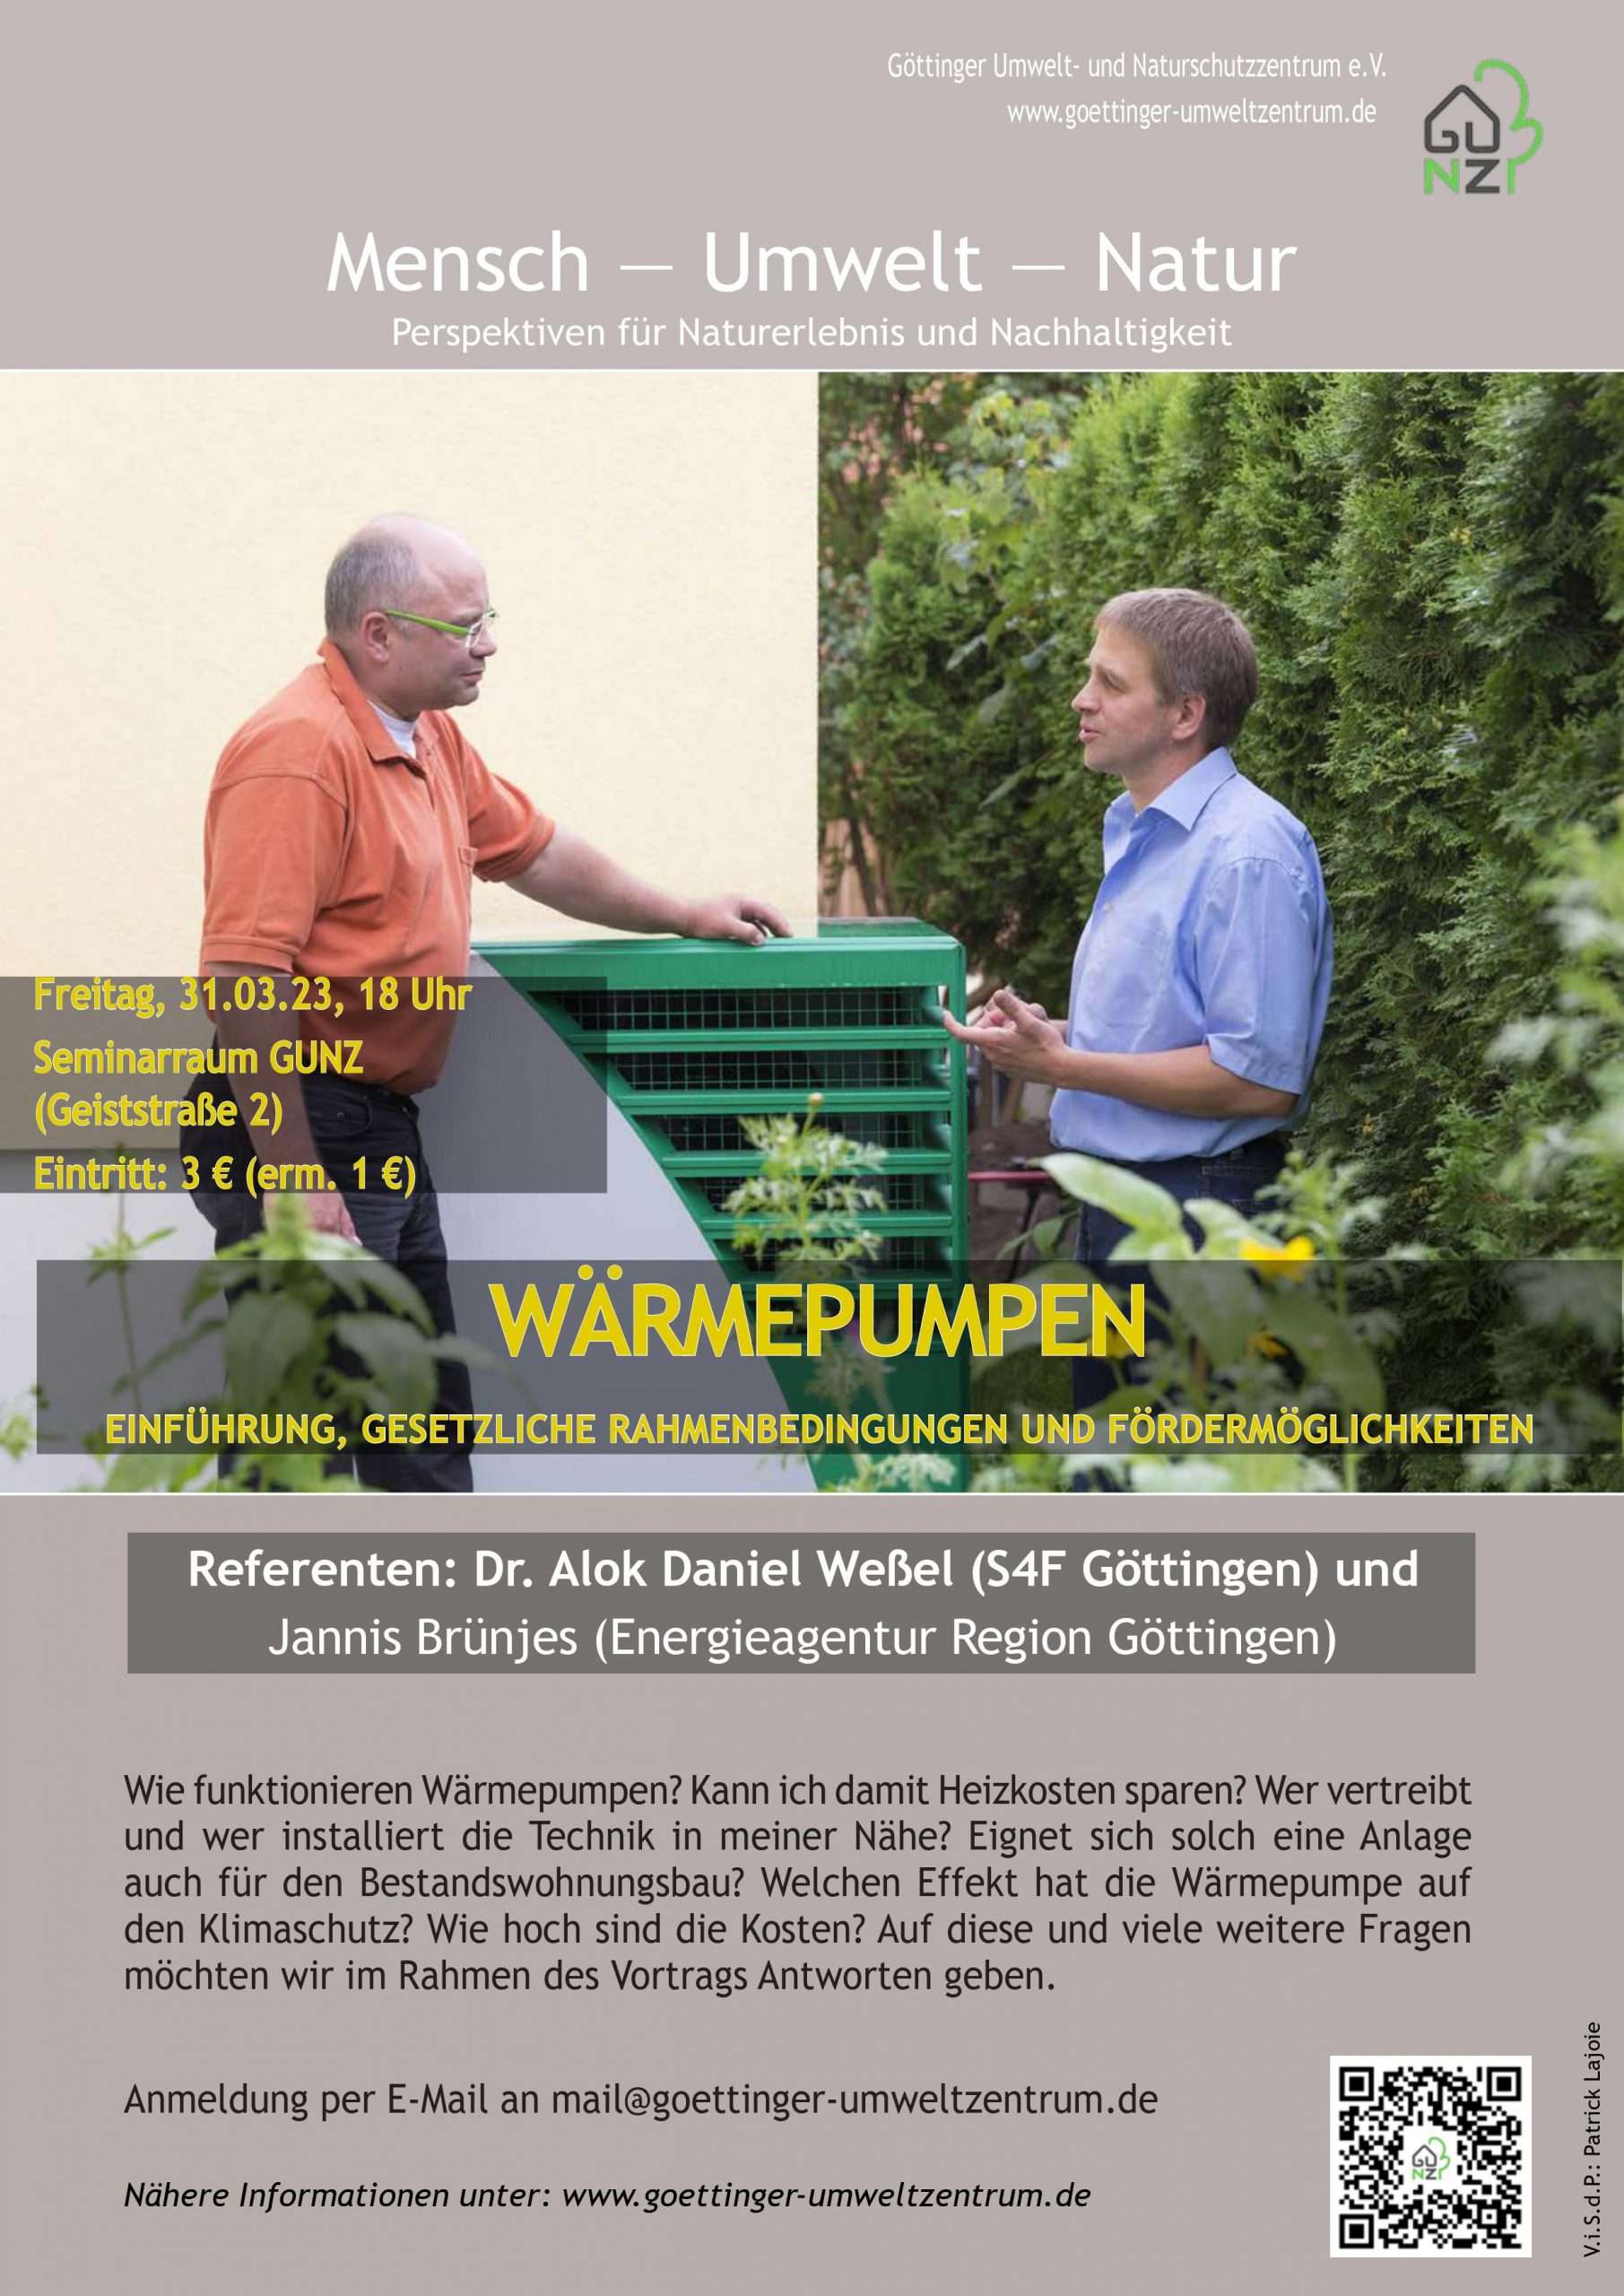 https://www.goettinger-umweltzentrum.de/wp-content/uploads/2023/02/Plakat_Waerempumpen-scaled.jpg